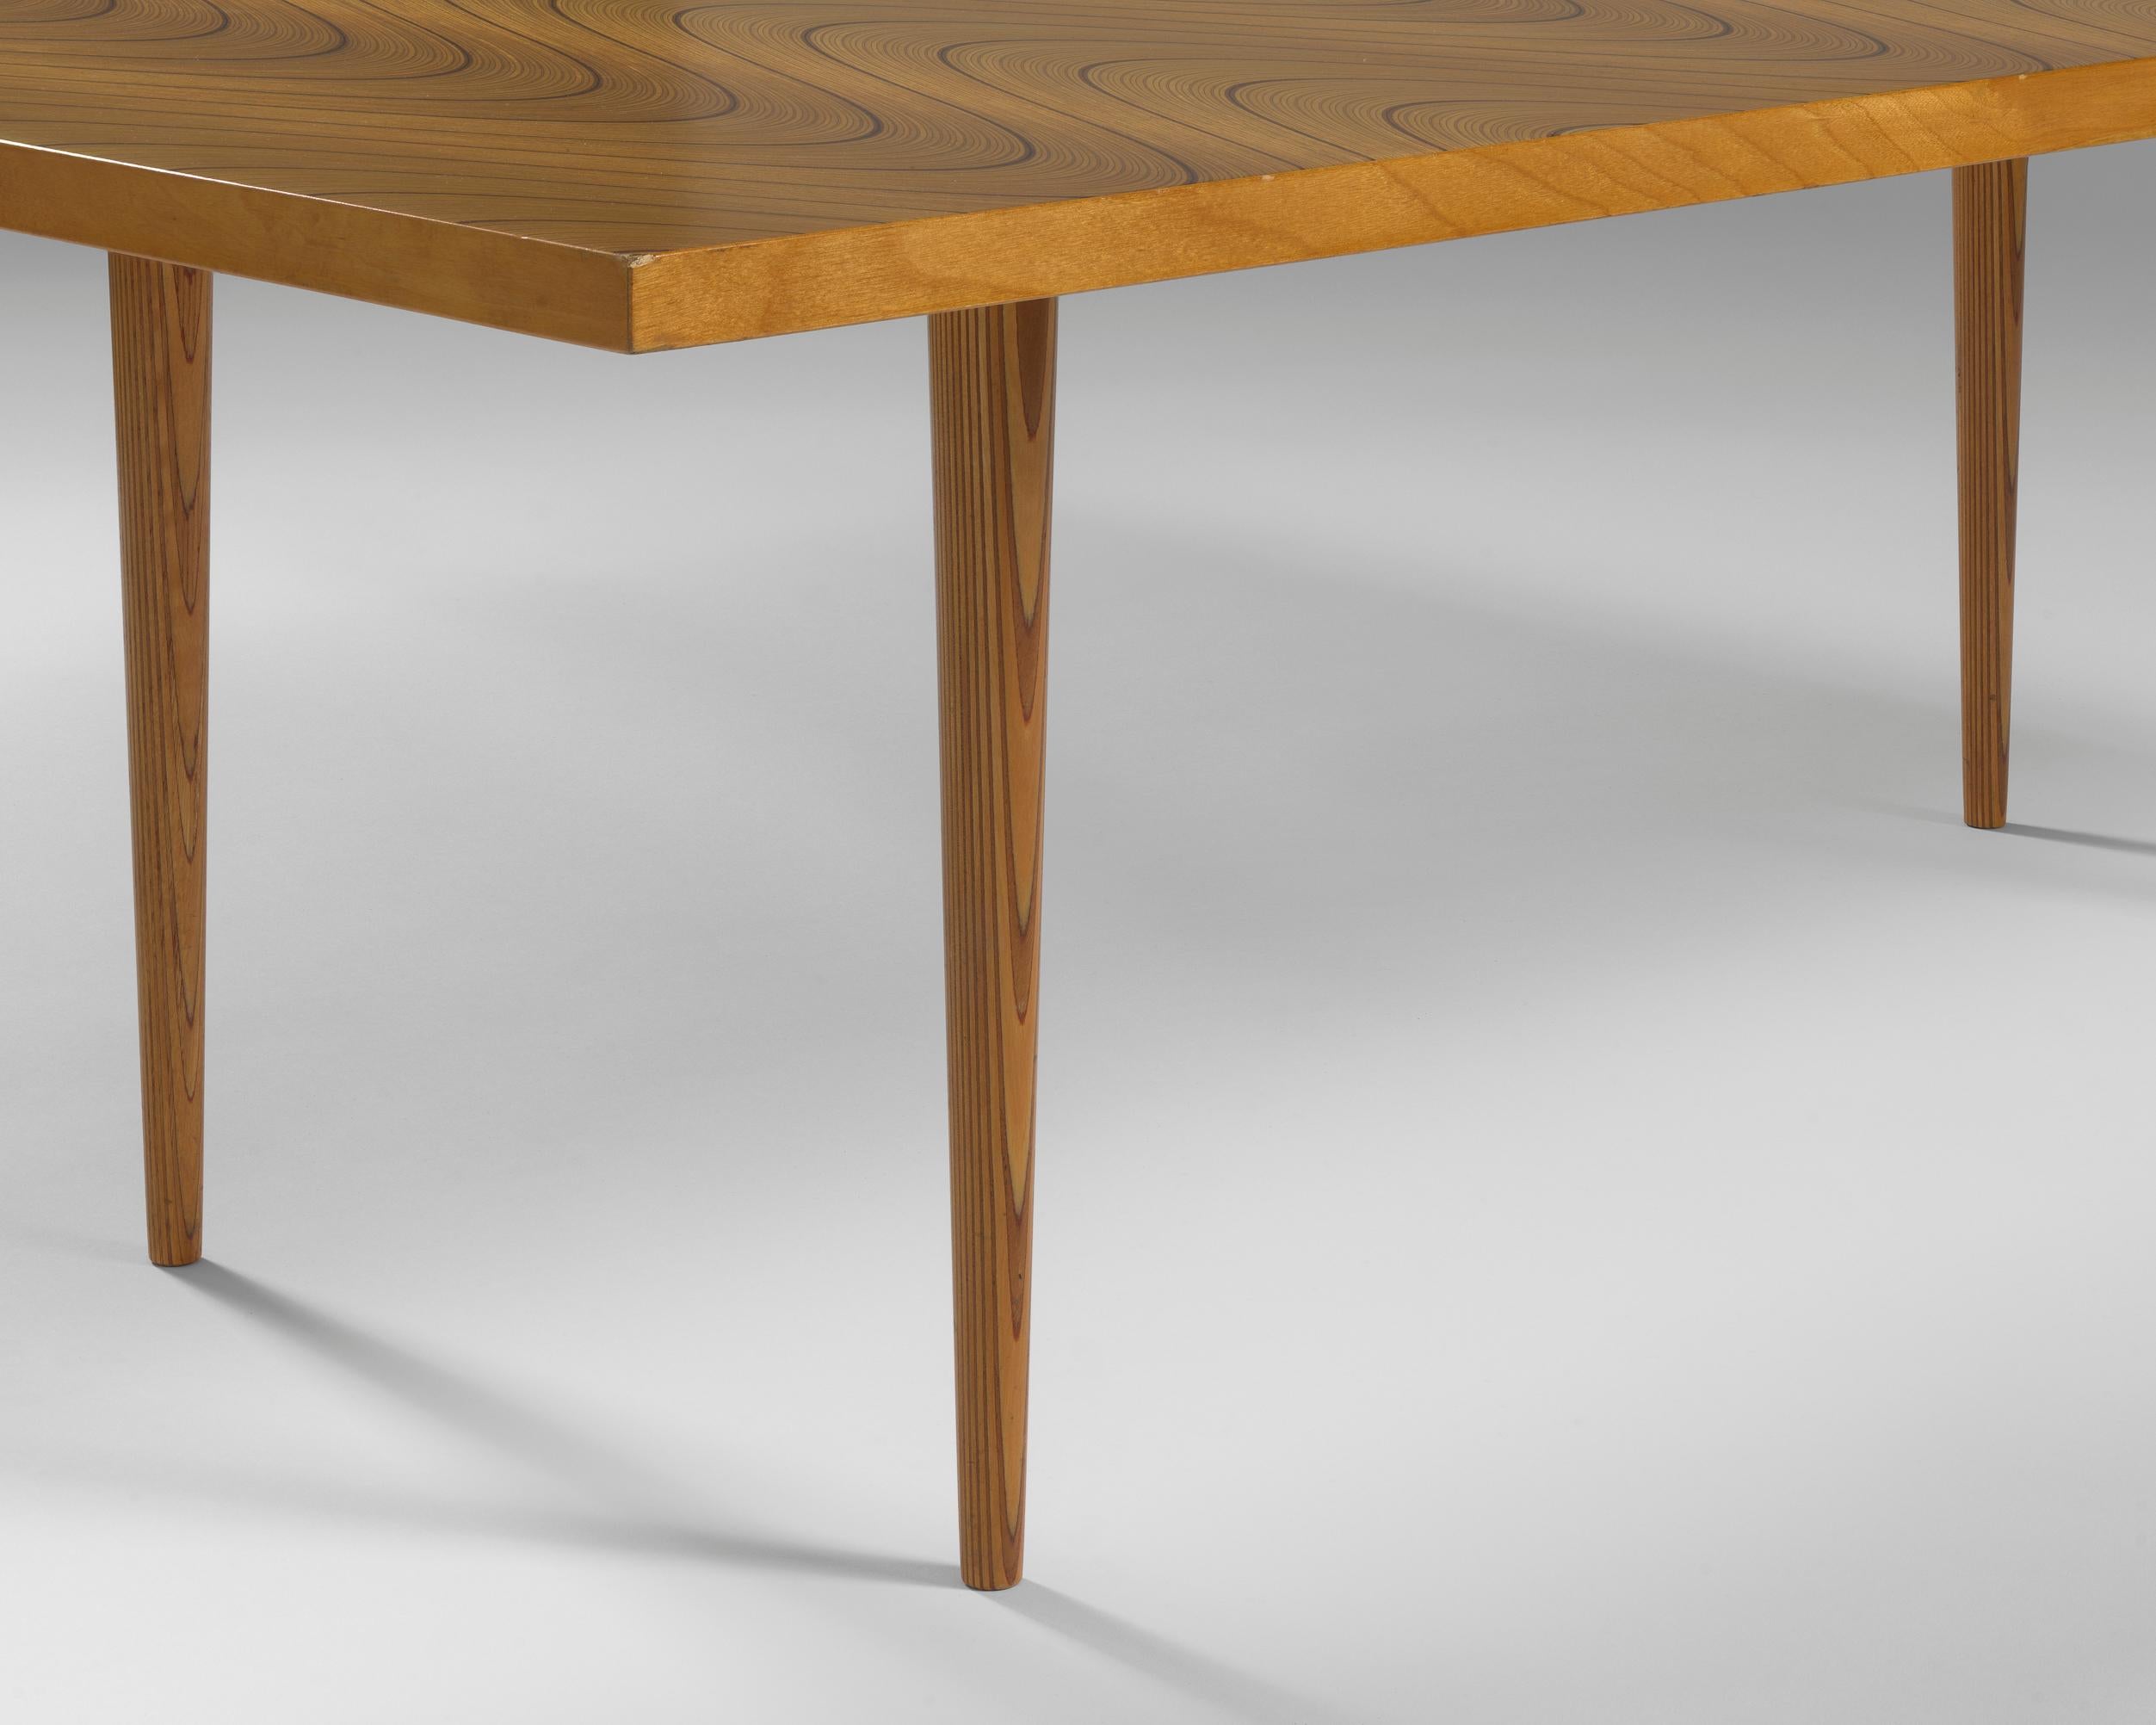 Mid-20th Century Occasional Table “Rhythmic Plywood” Designed by Tapio Wirkkala for Asko, Finland